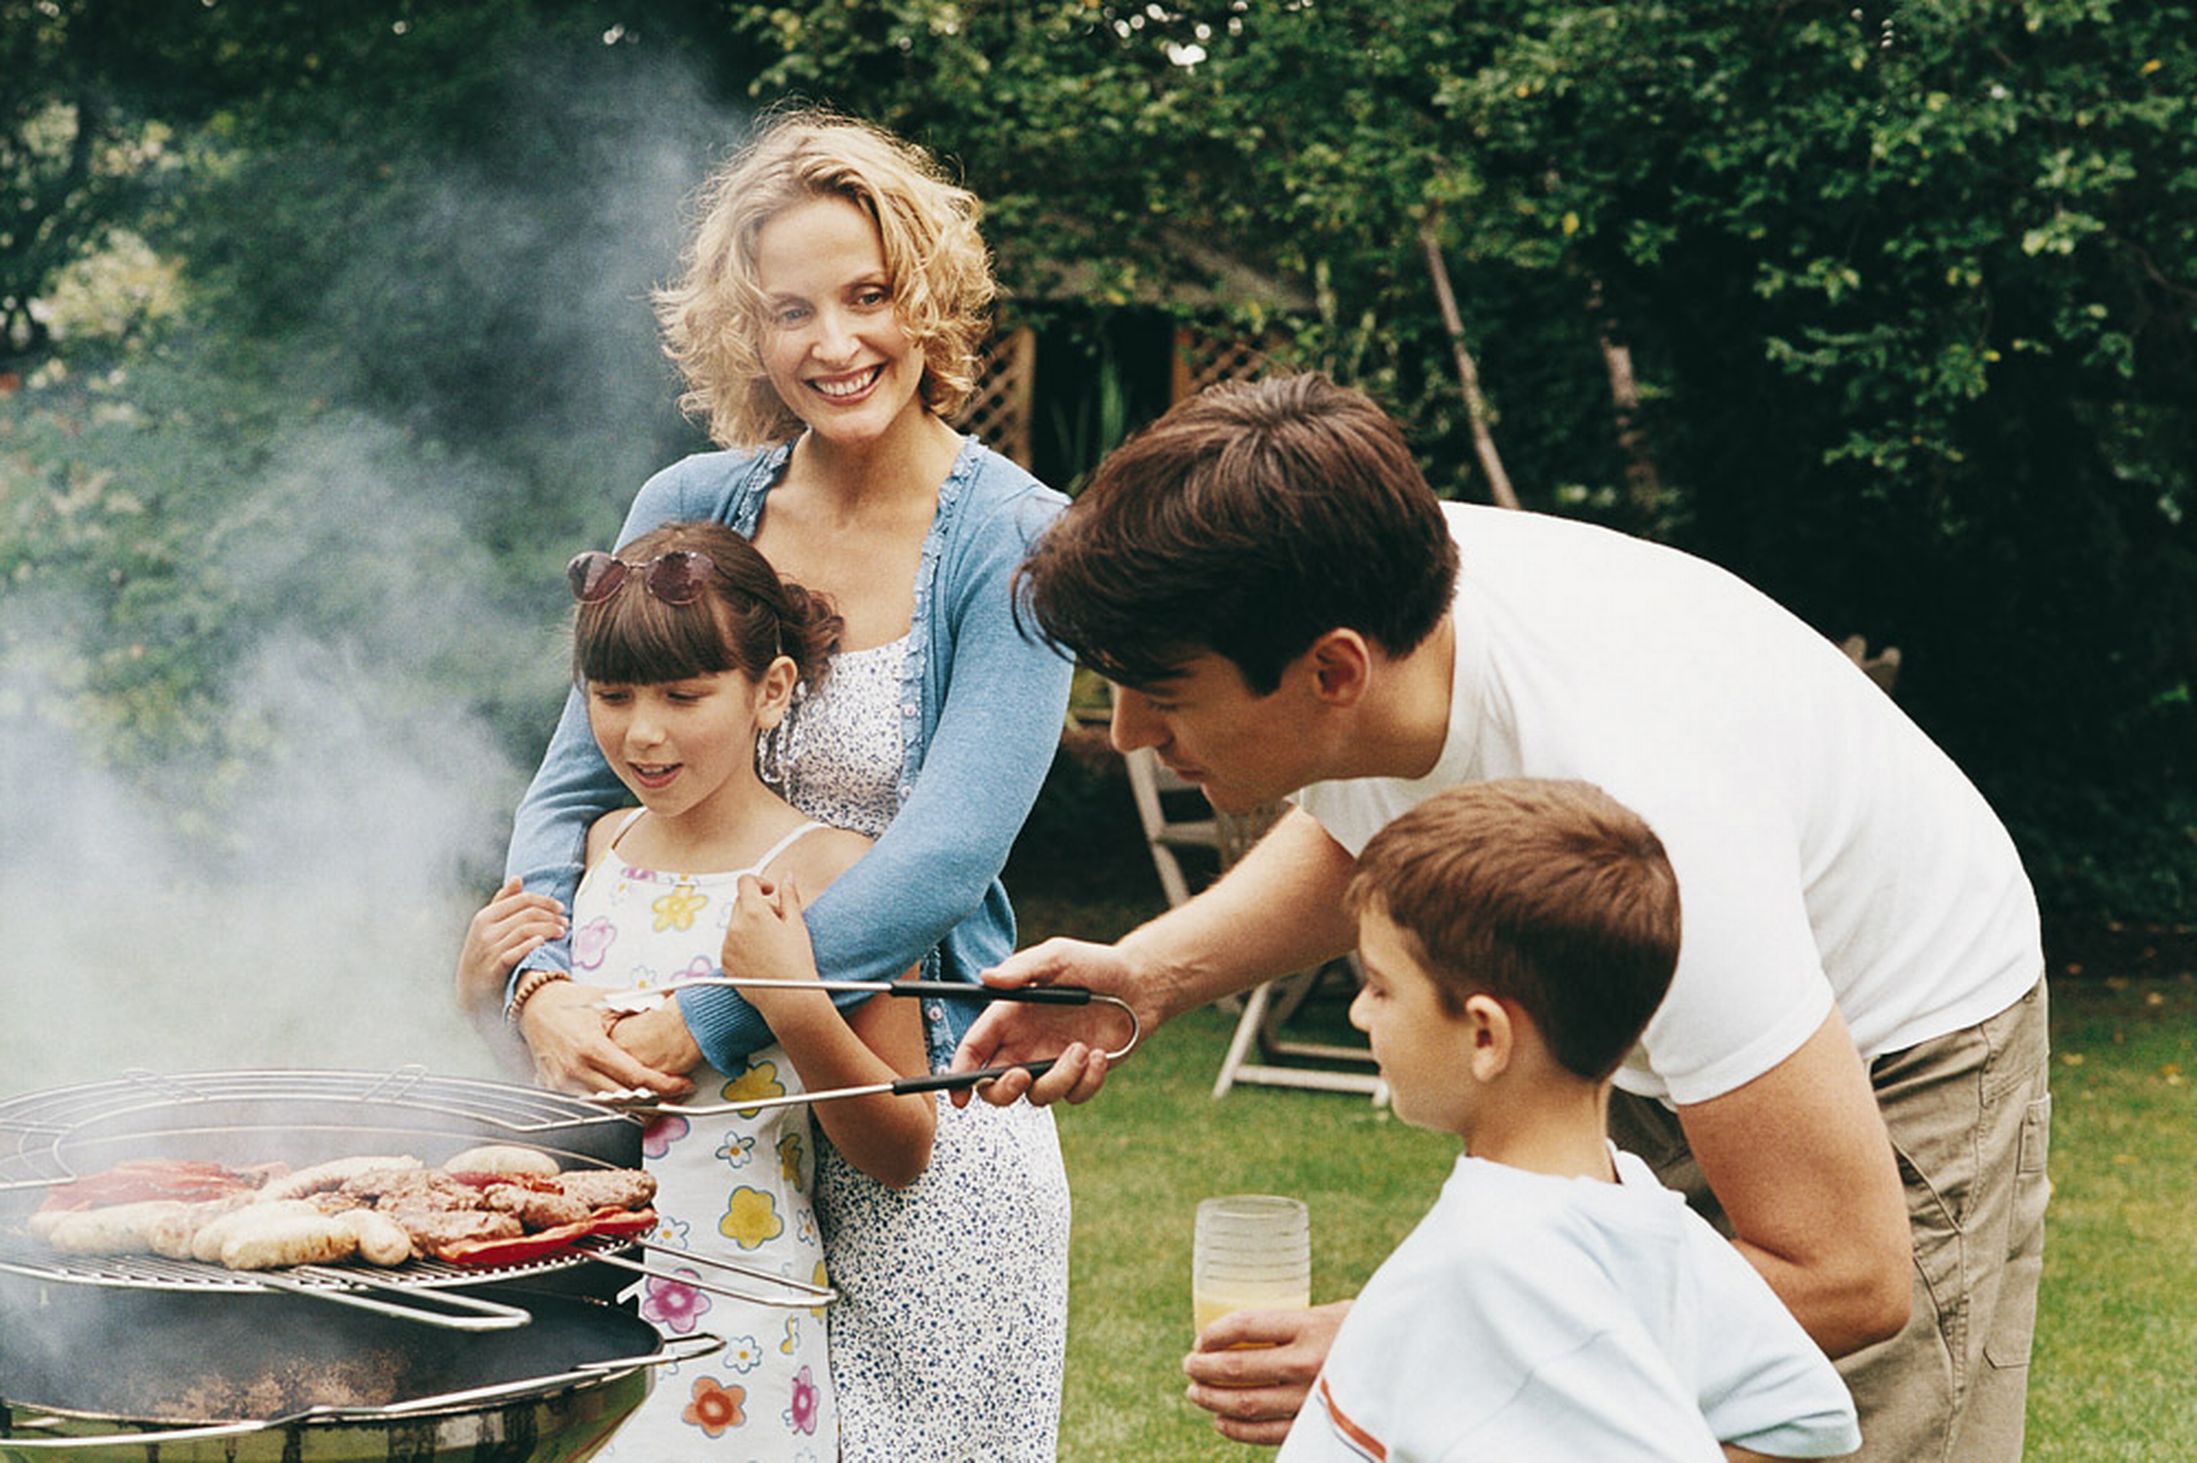 Family-cooking-a-barbecue-in-their-garden